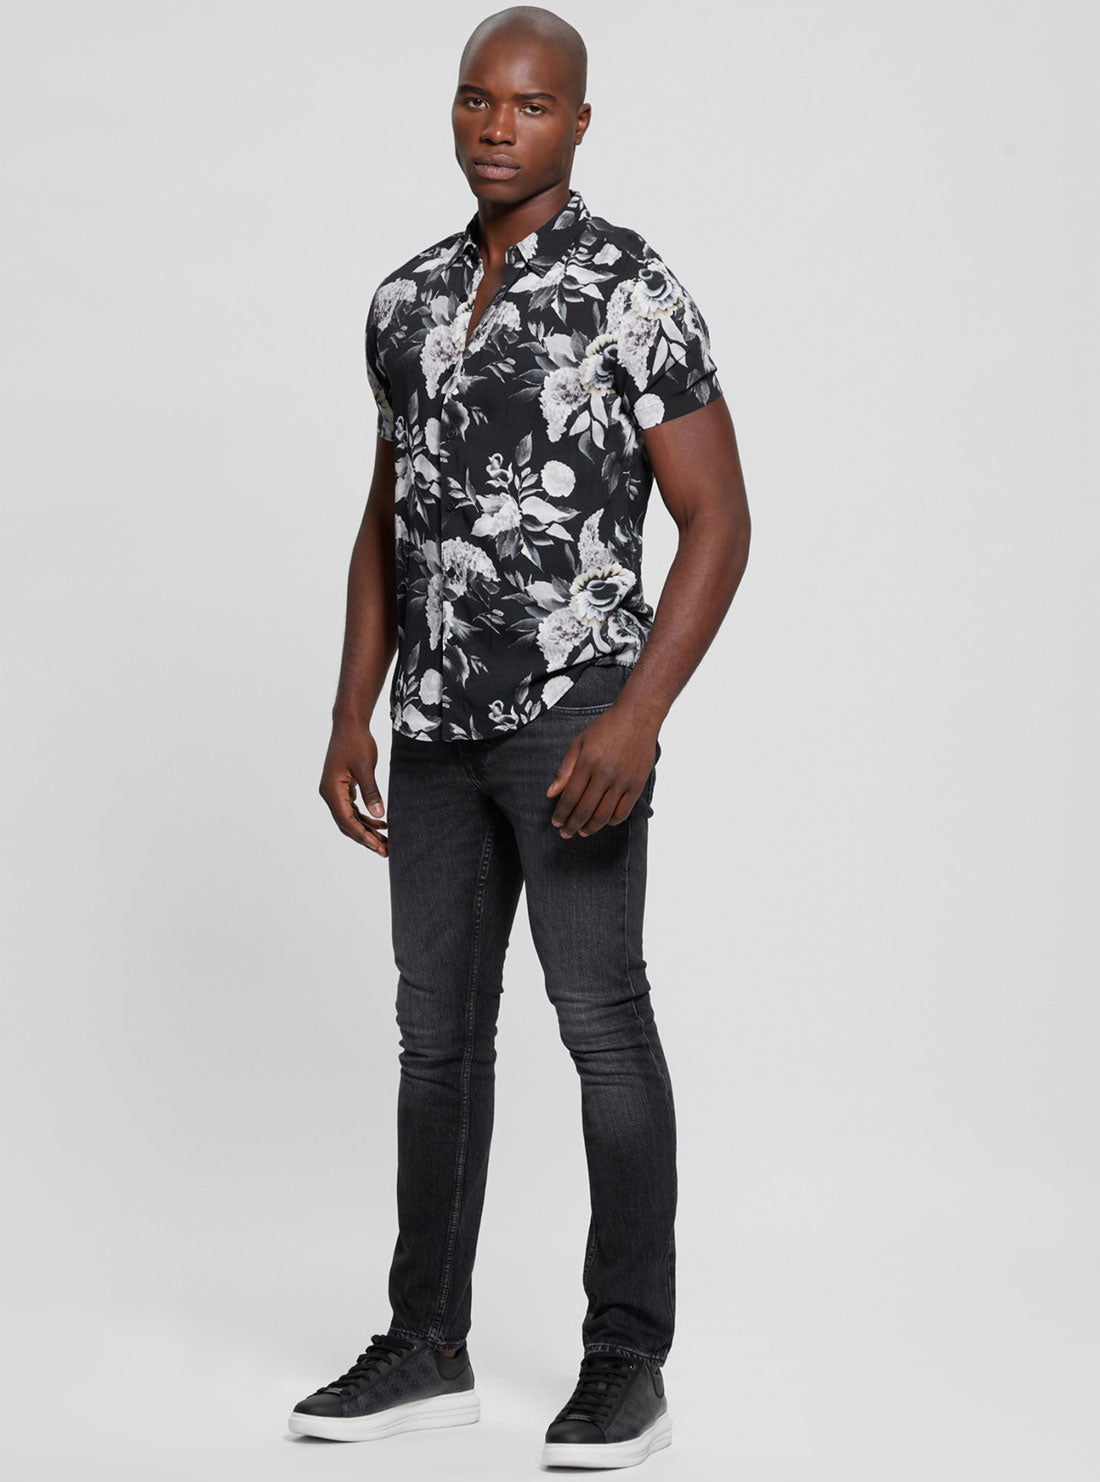 Eco Black Rayon Floral Shirt | GUESS Men's Apparel | full view